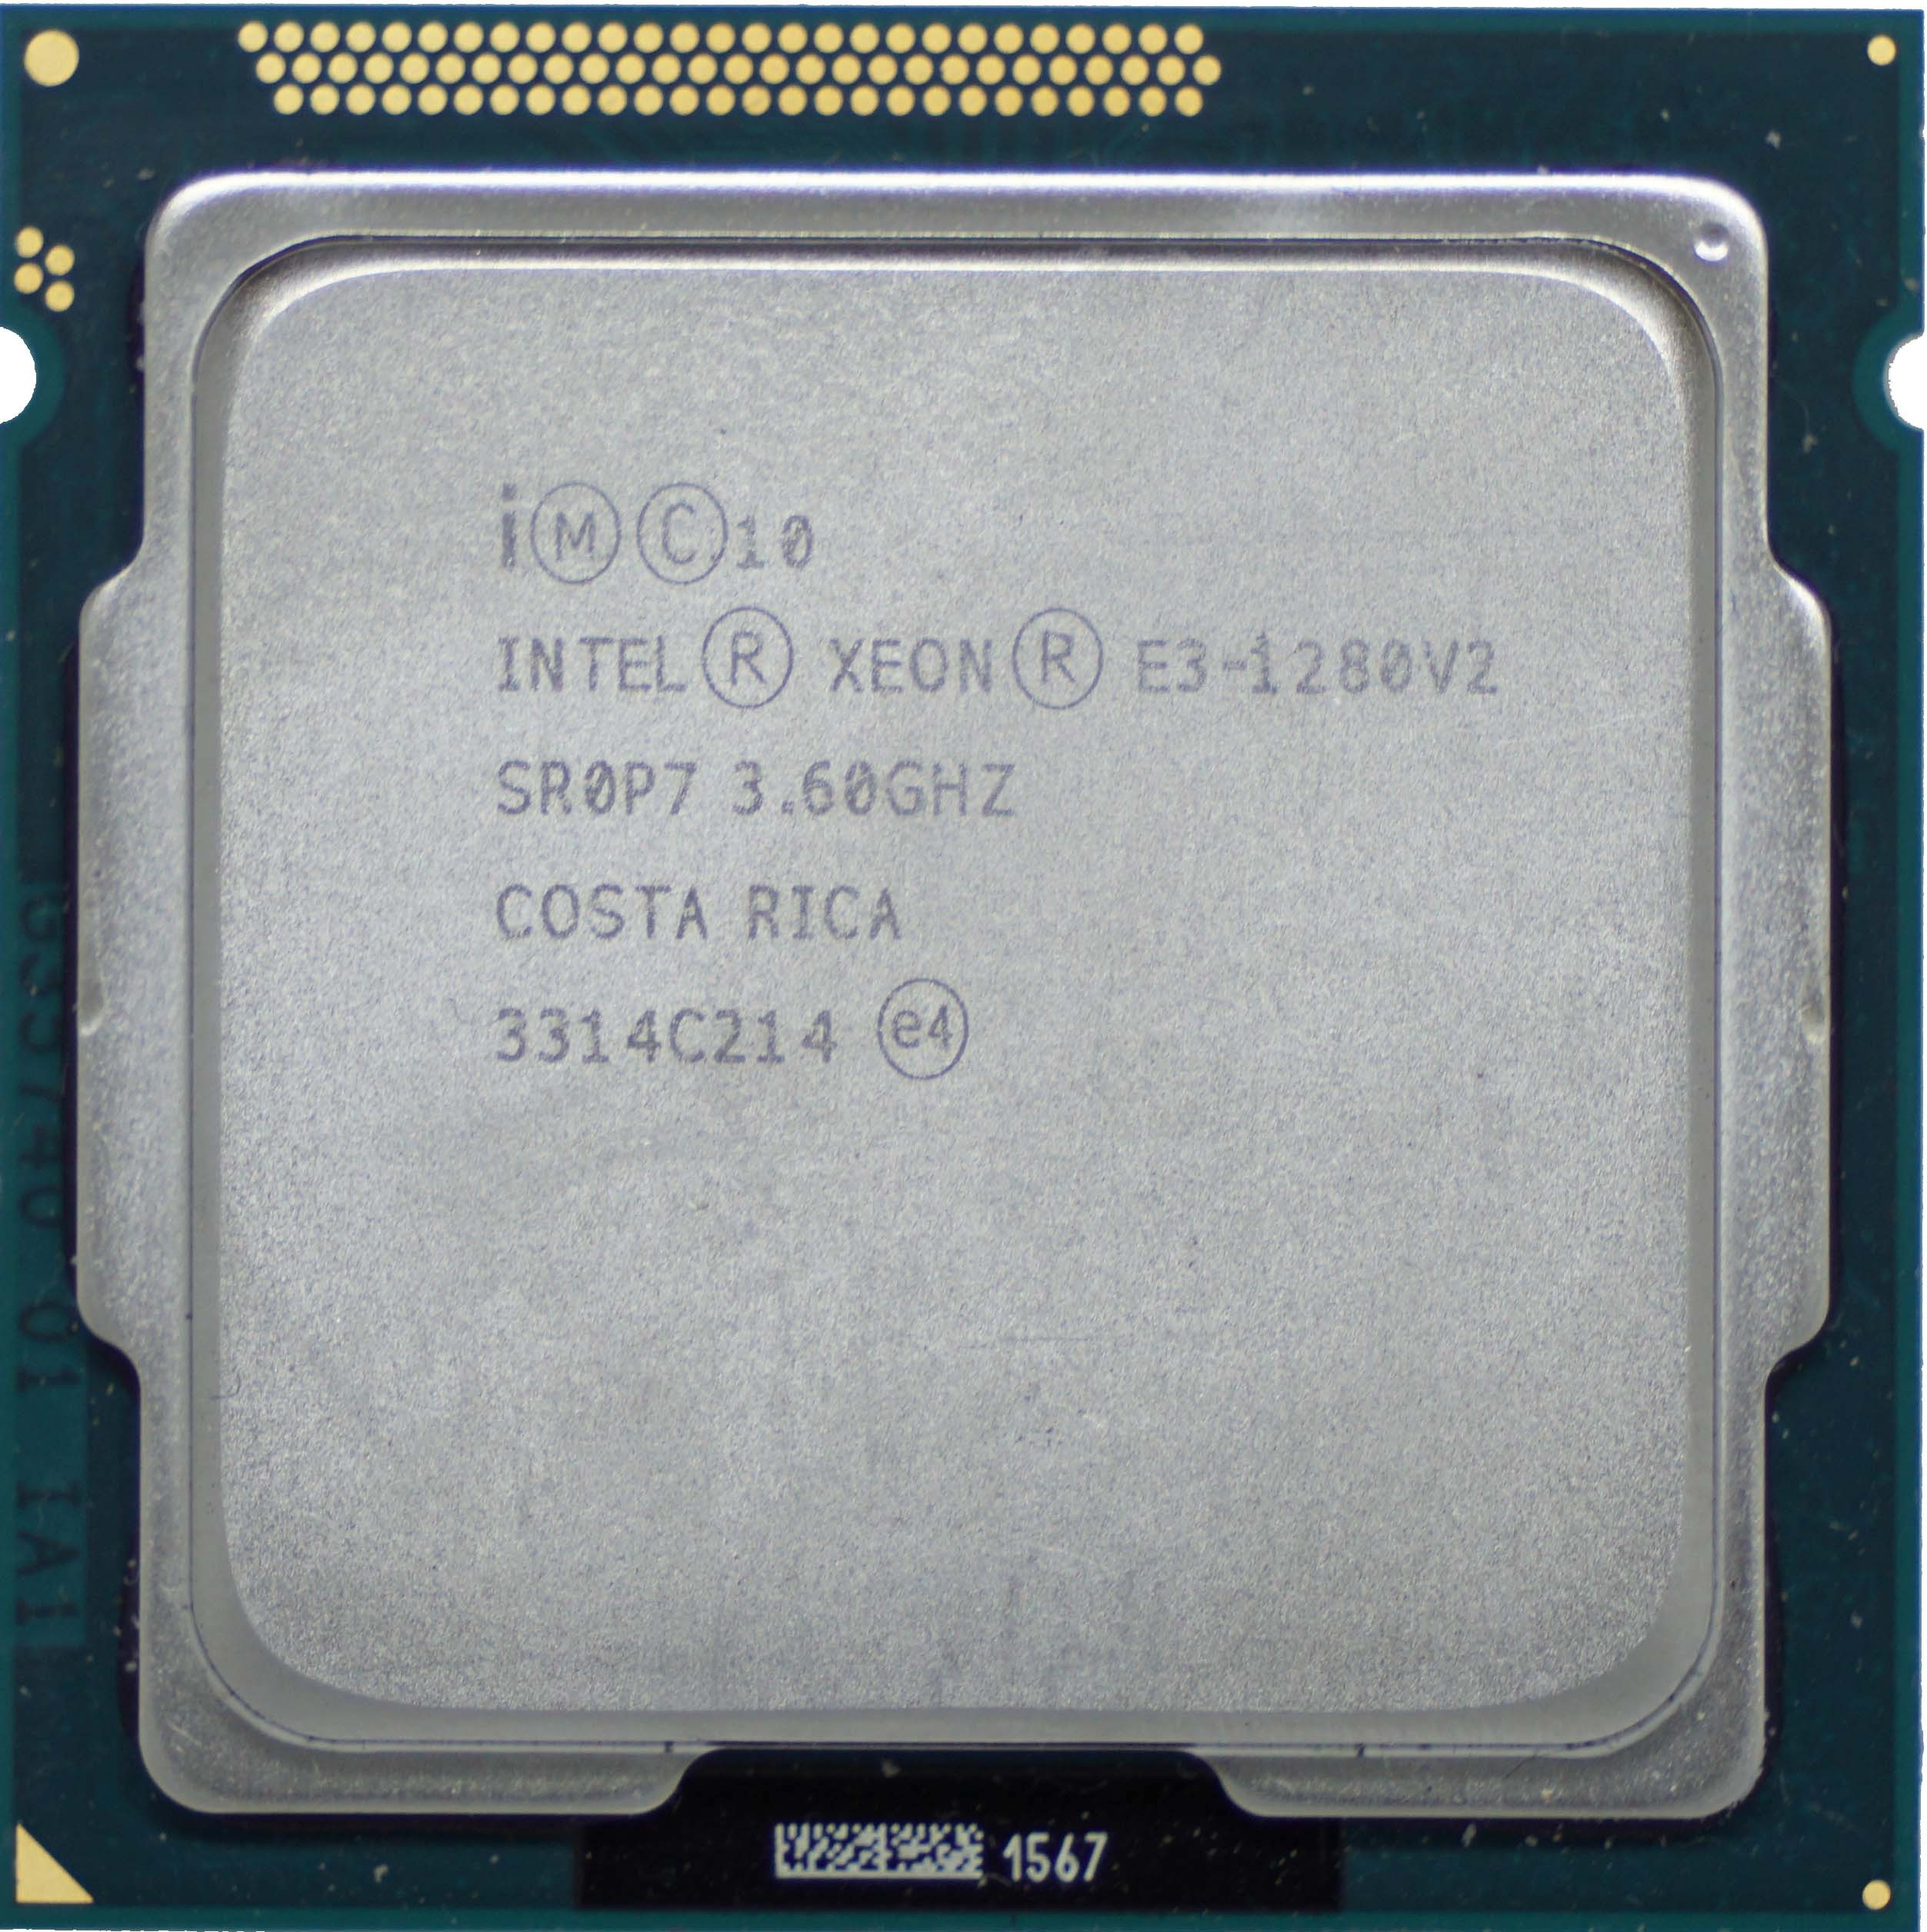 Intel Xeon 1280 V2 Sr0p7 3 60ghz Quad 4 Core Lga1155 69w Cpu Processor